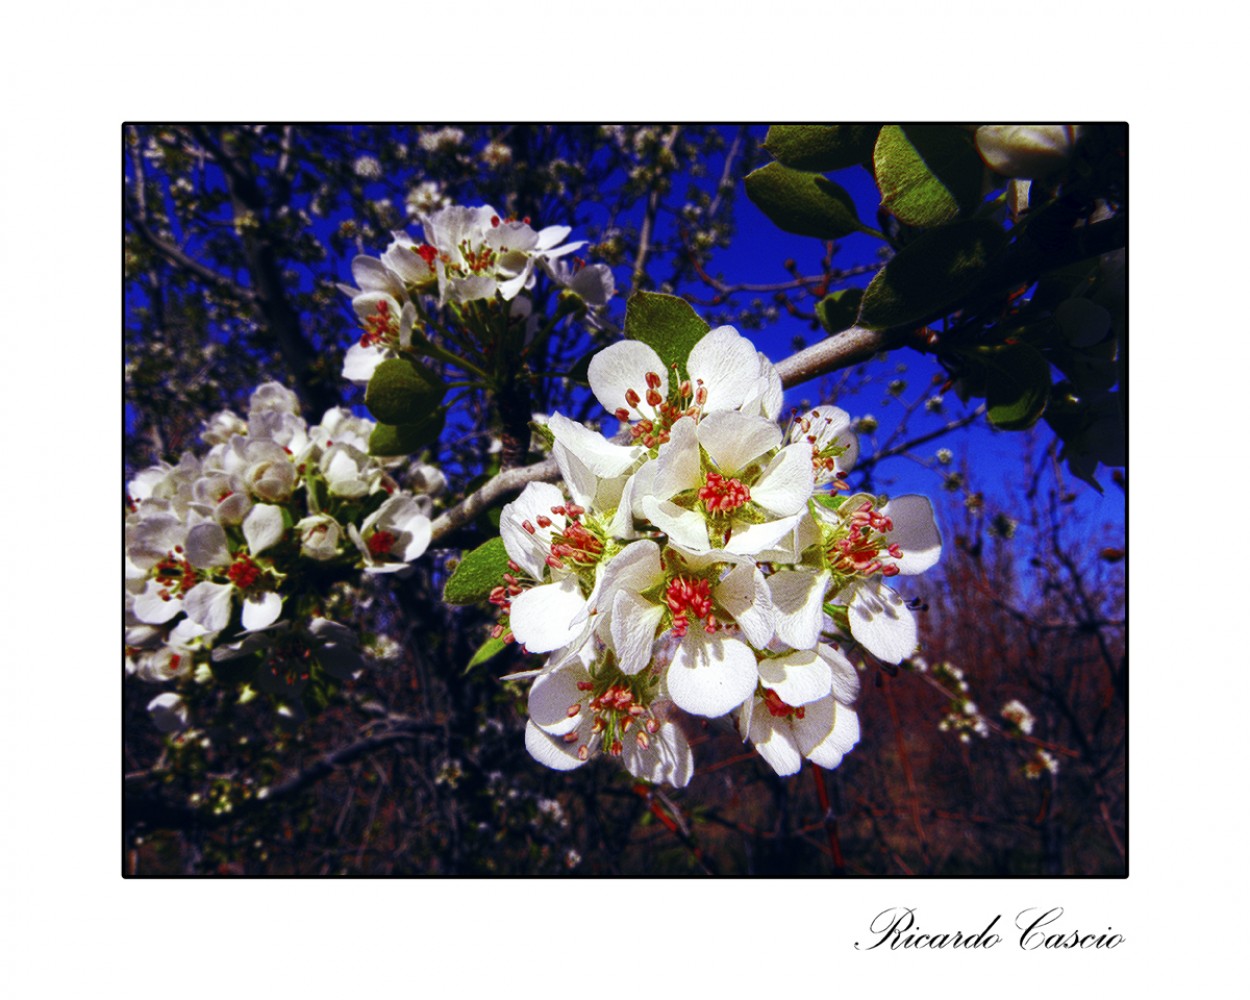 "La consagracin de la primavera" de Ricardo Cascio